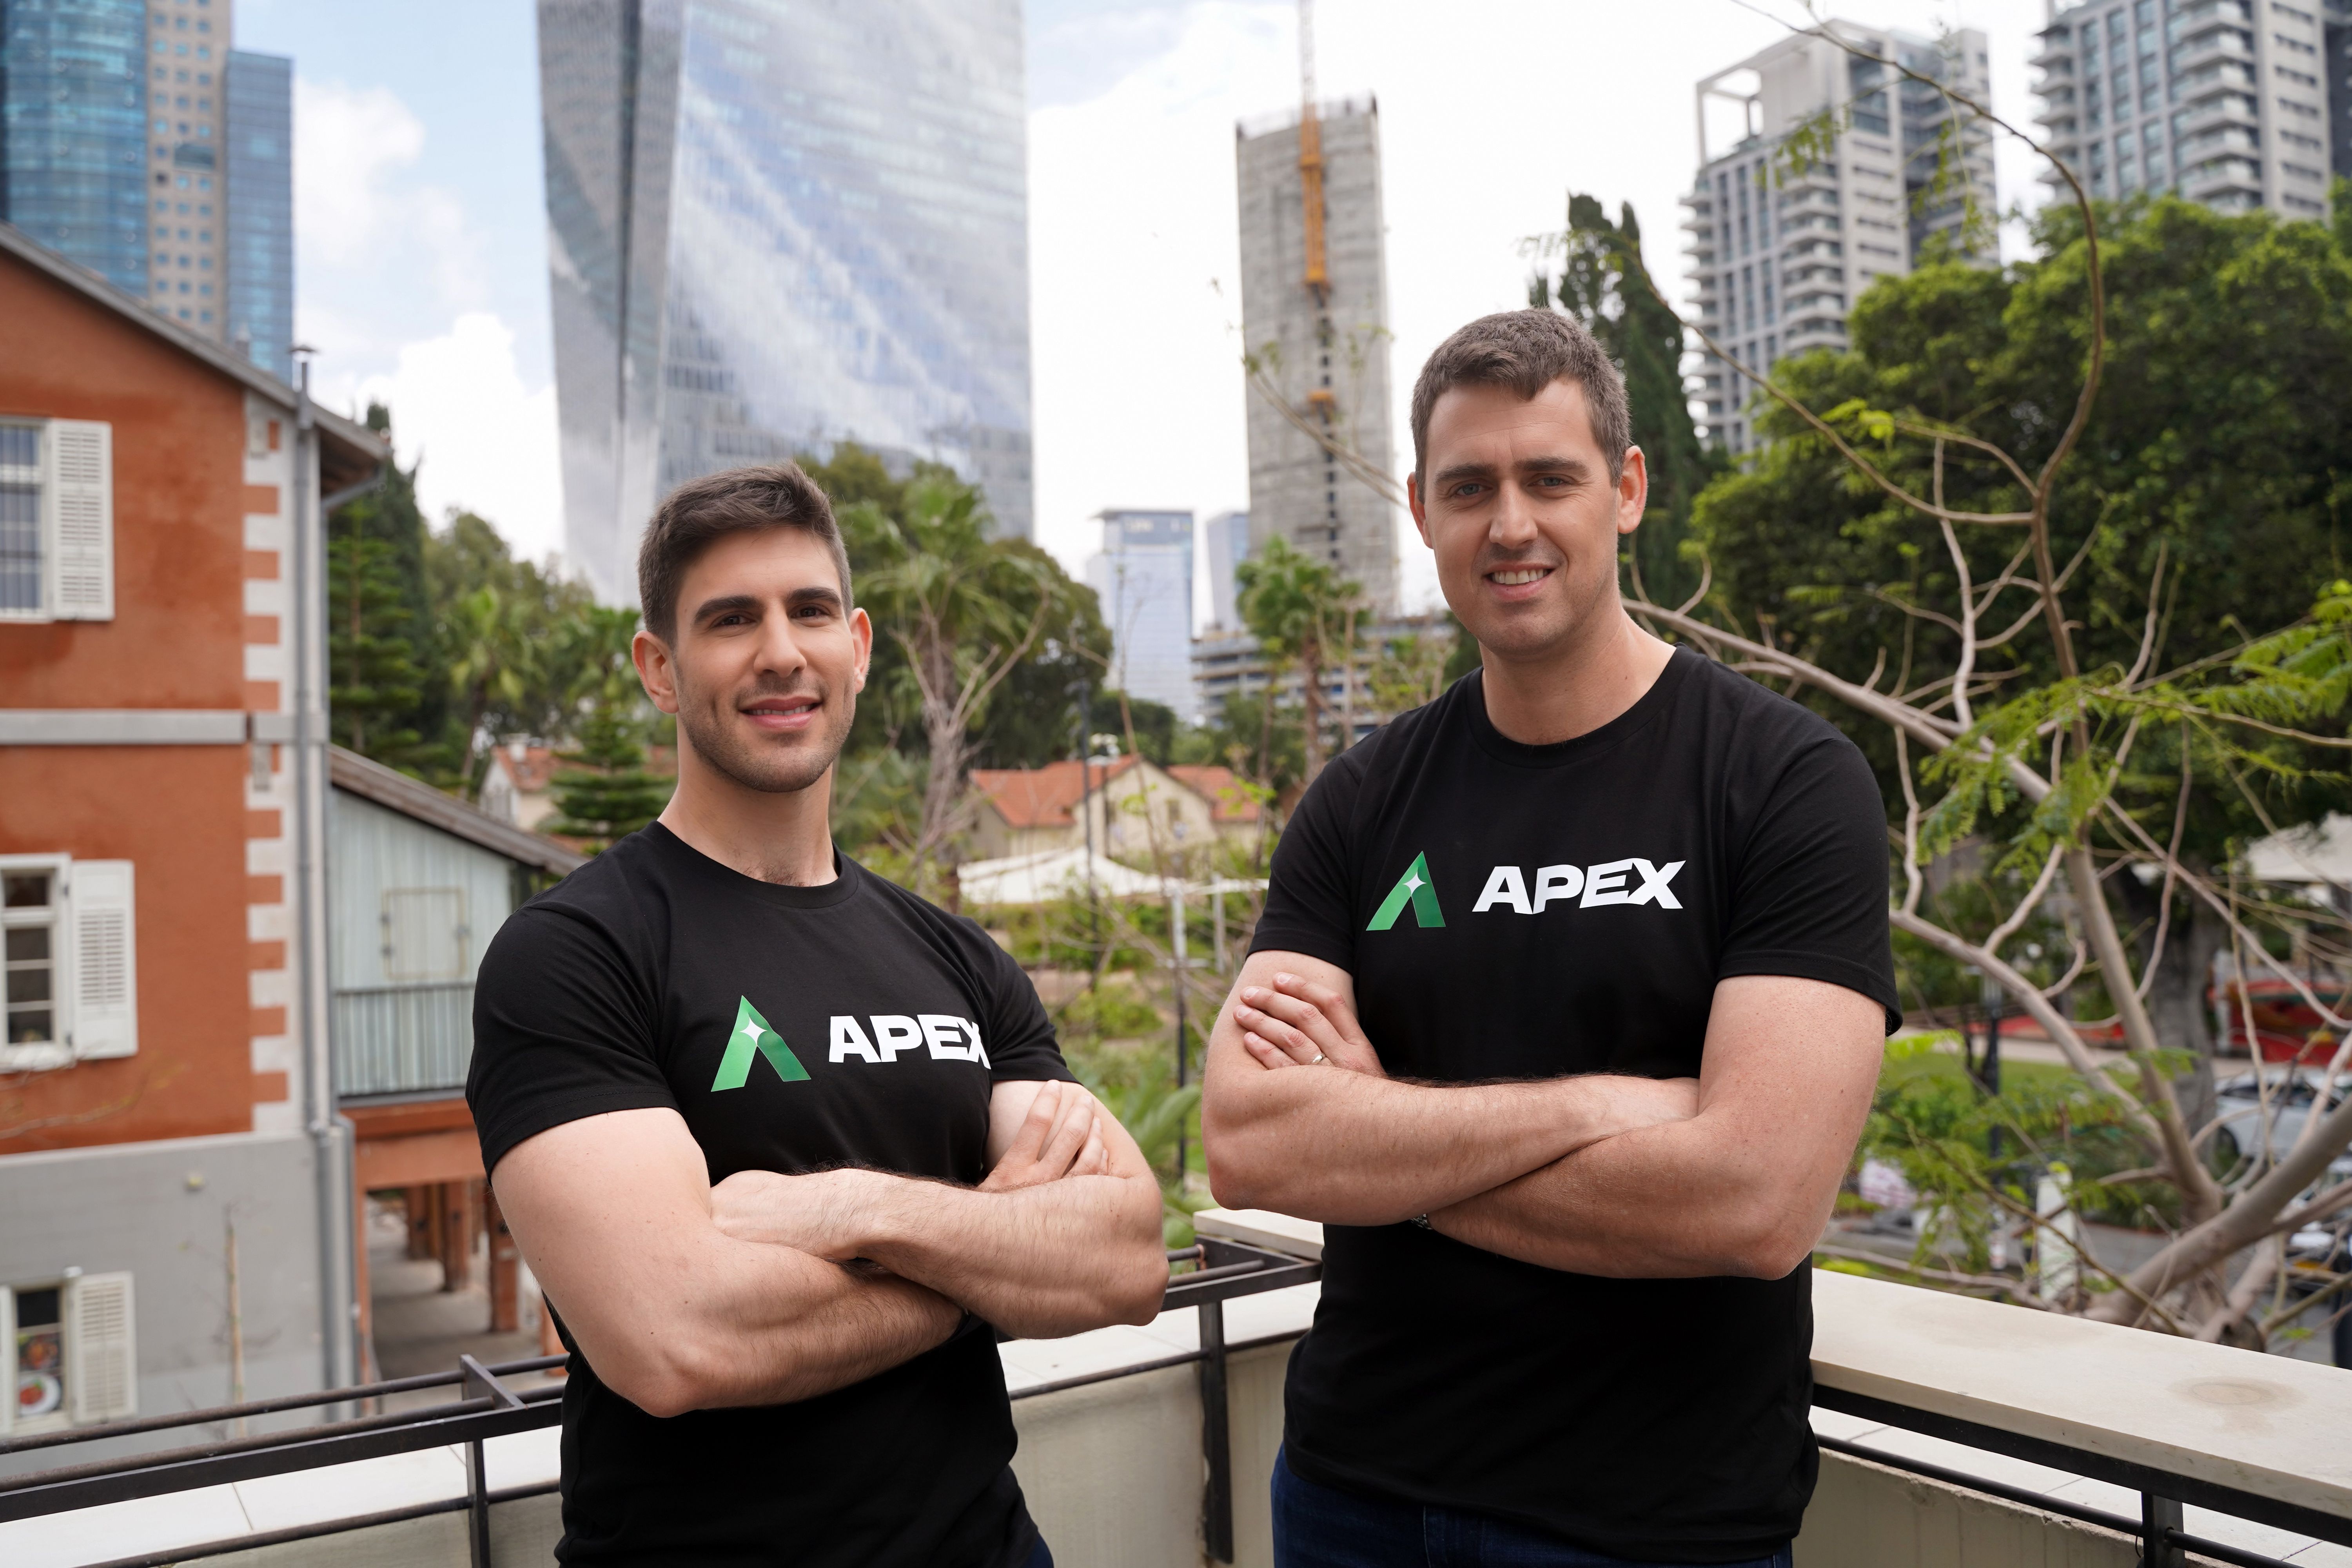 The Apex founding team, Tomer Avni and Matan Derman.